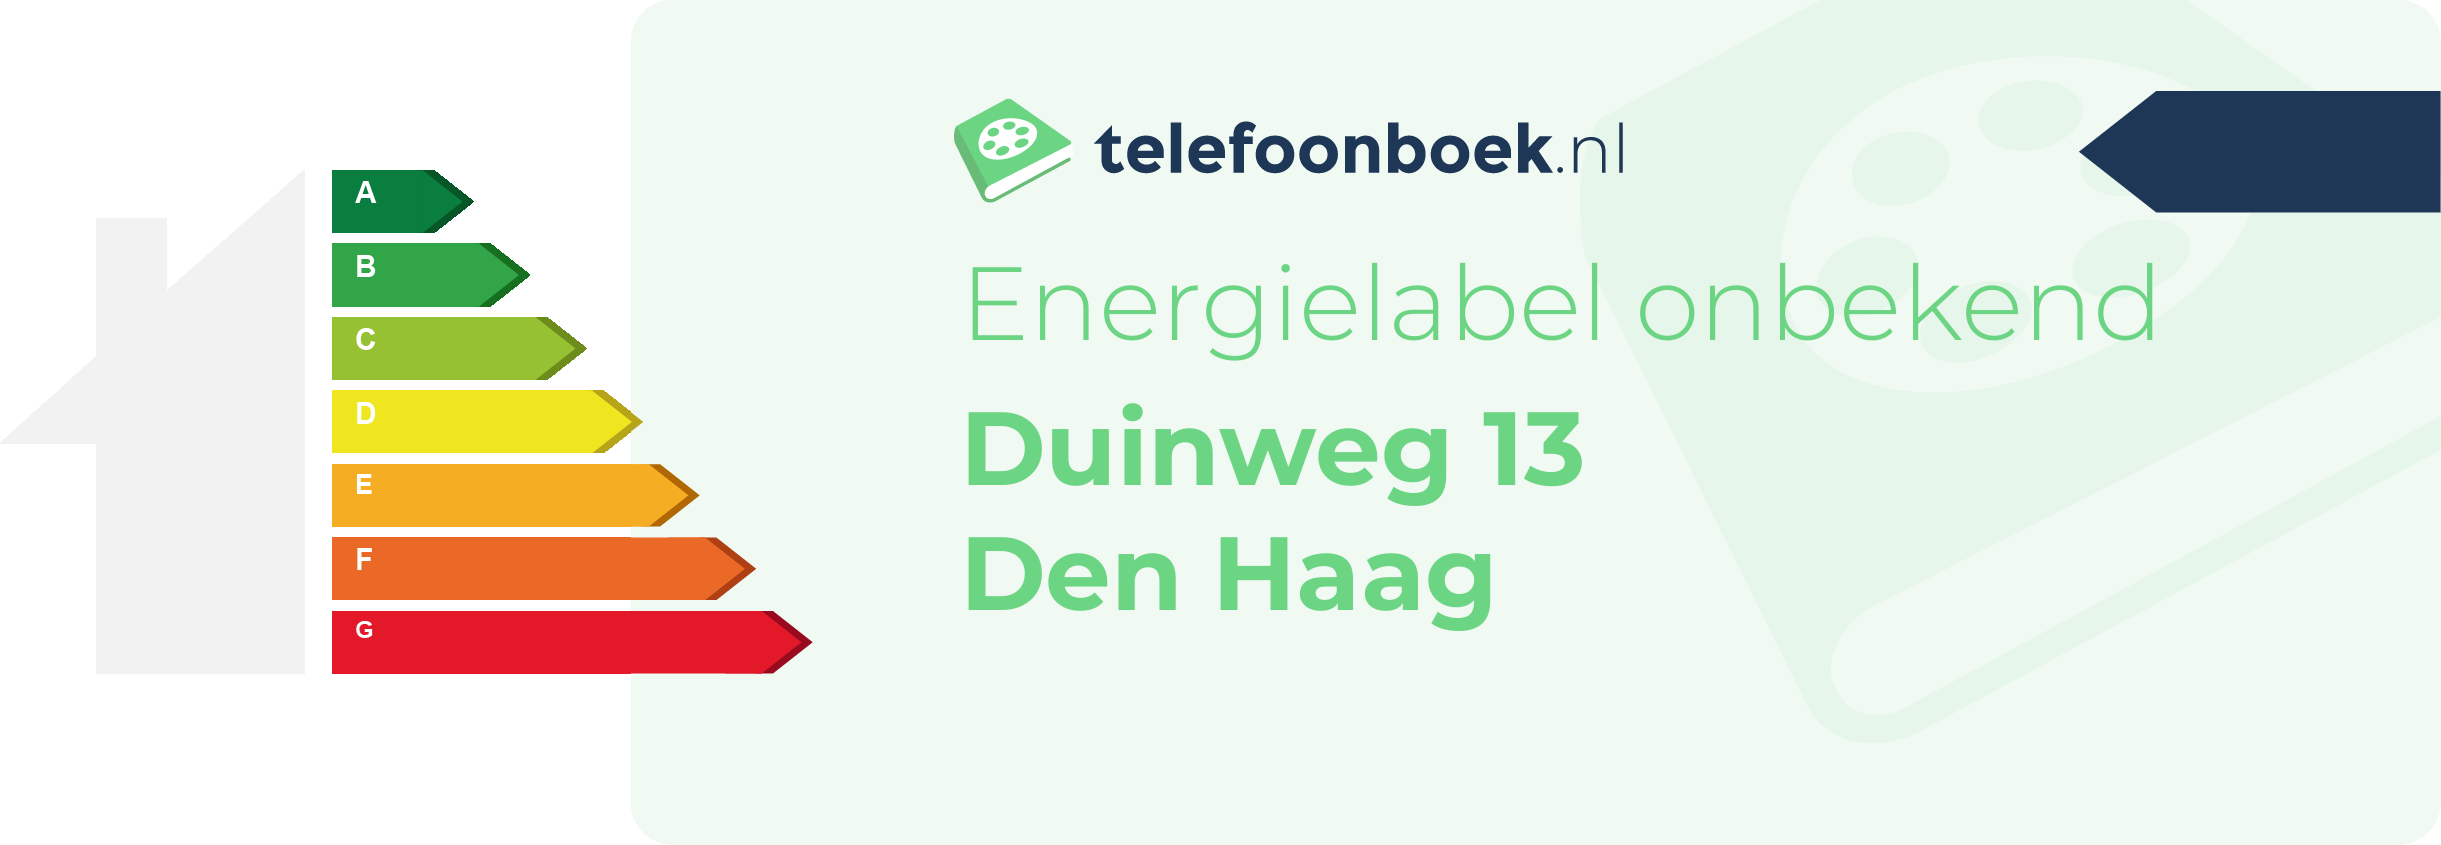 Energielabel Duinweg 13 Den Haag